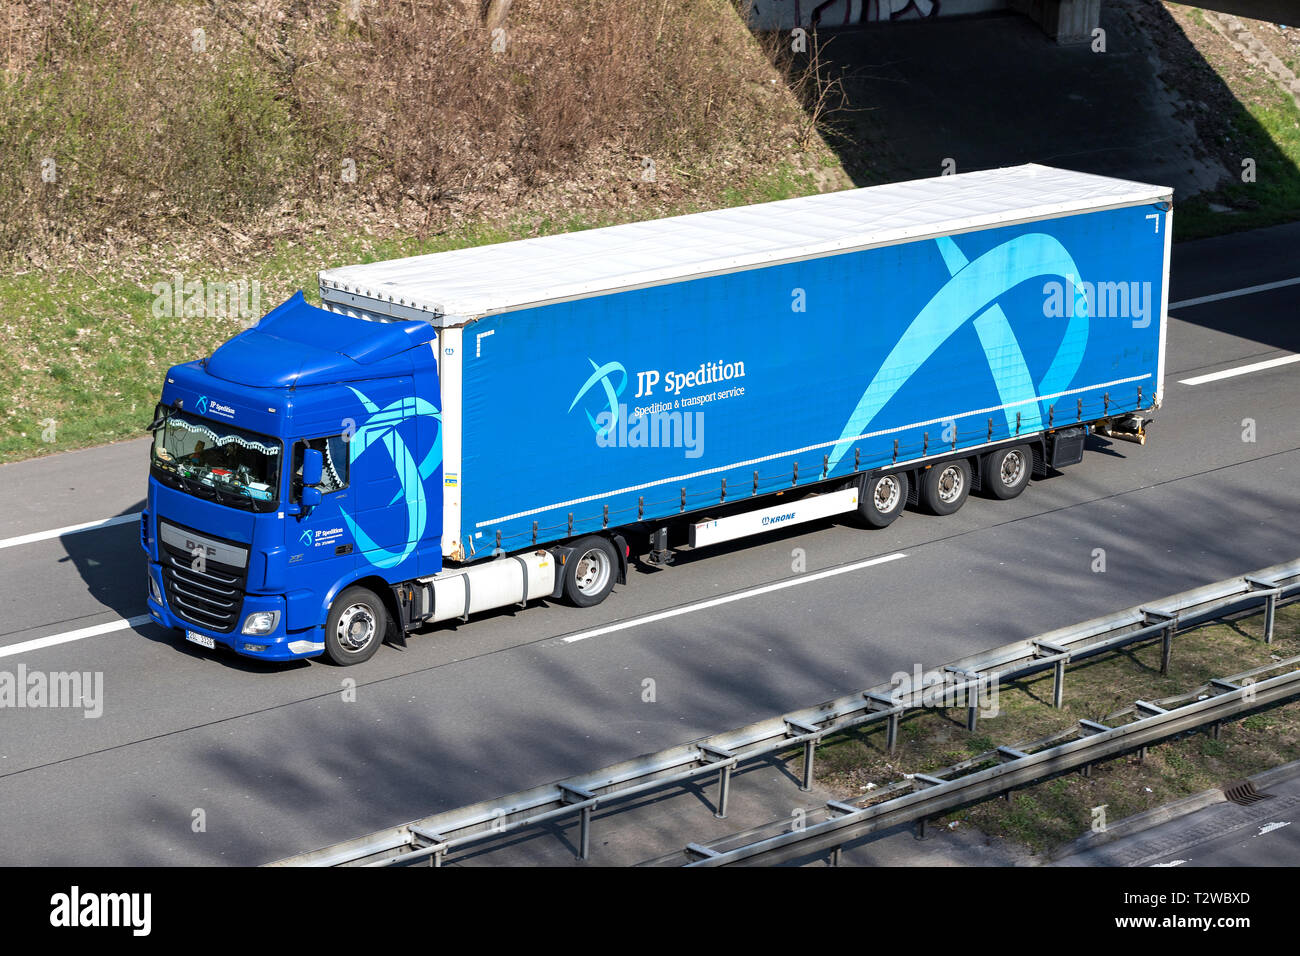 JP Spedition truck on German motorway. Stock Photo